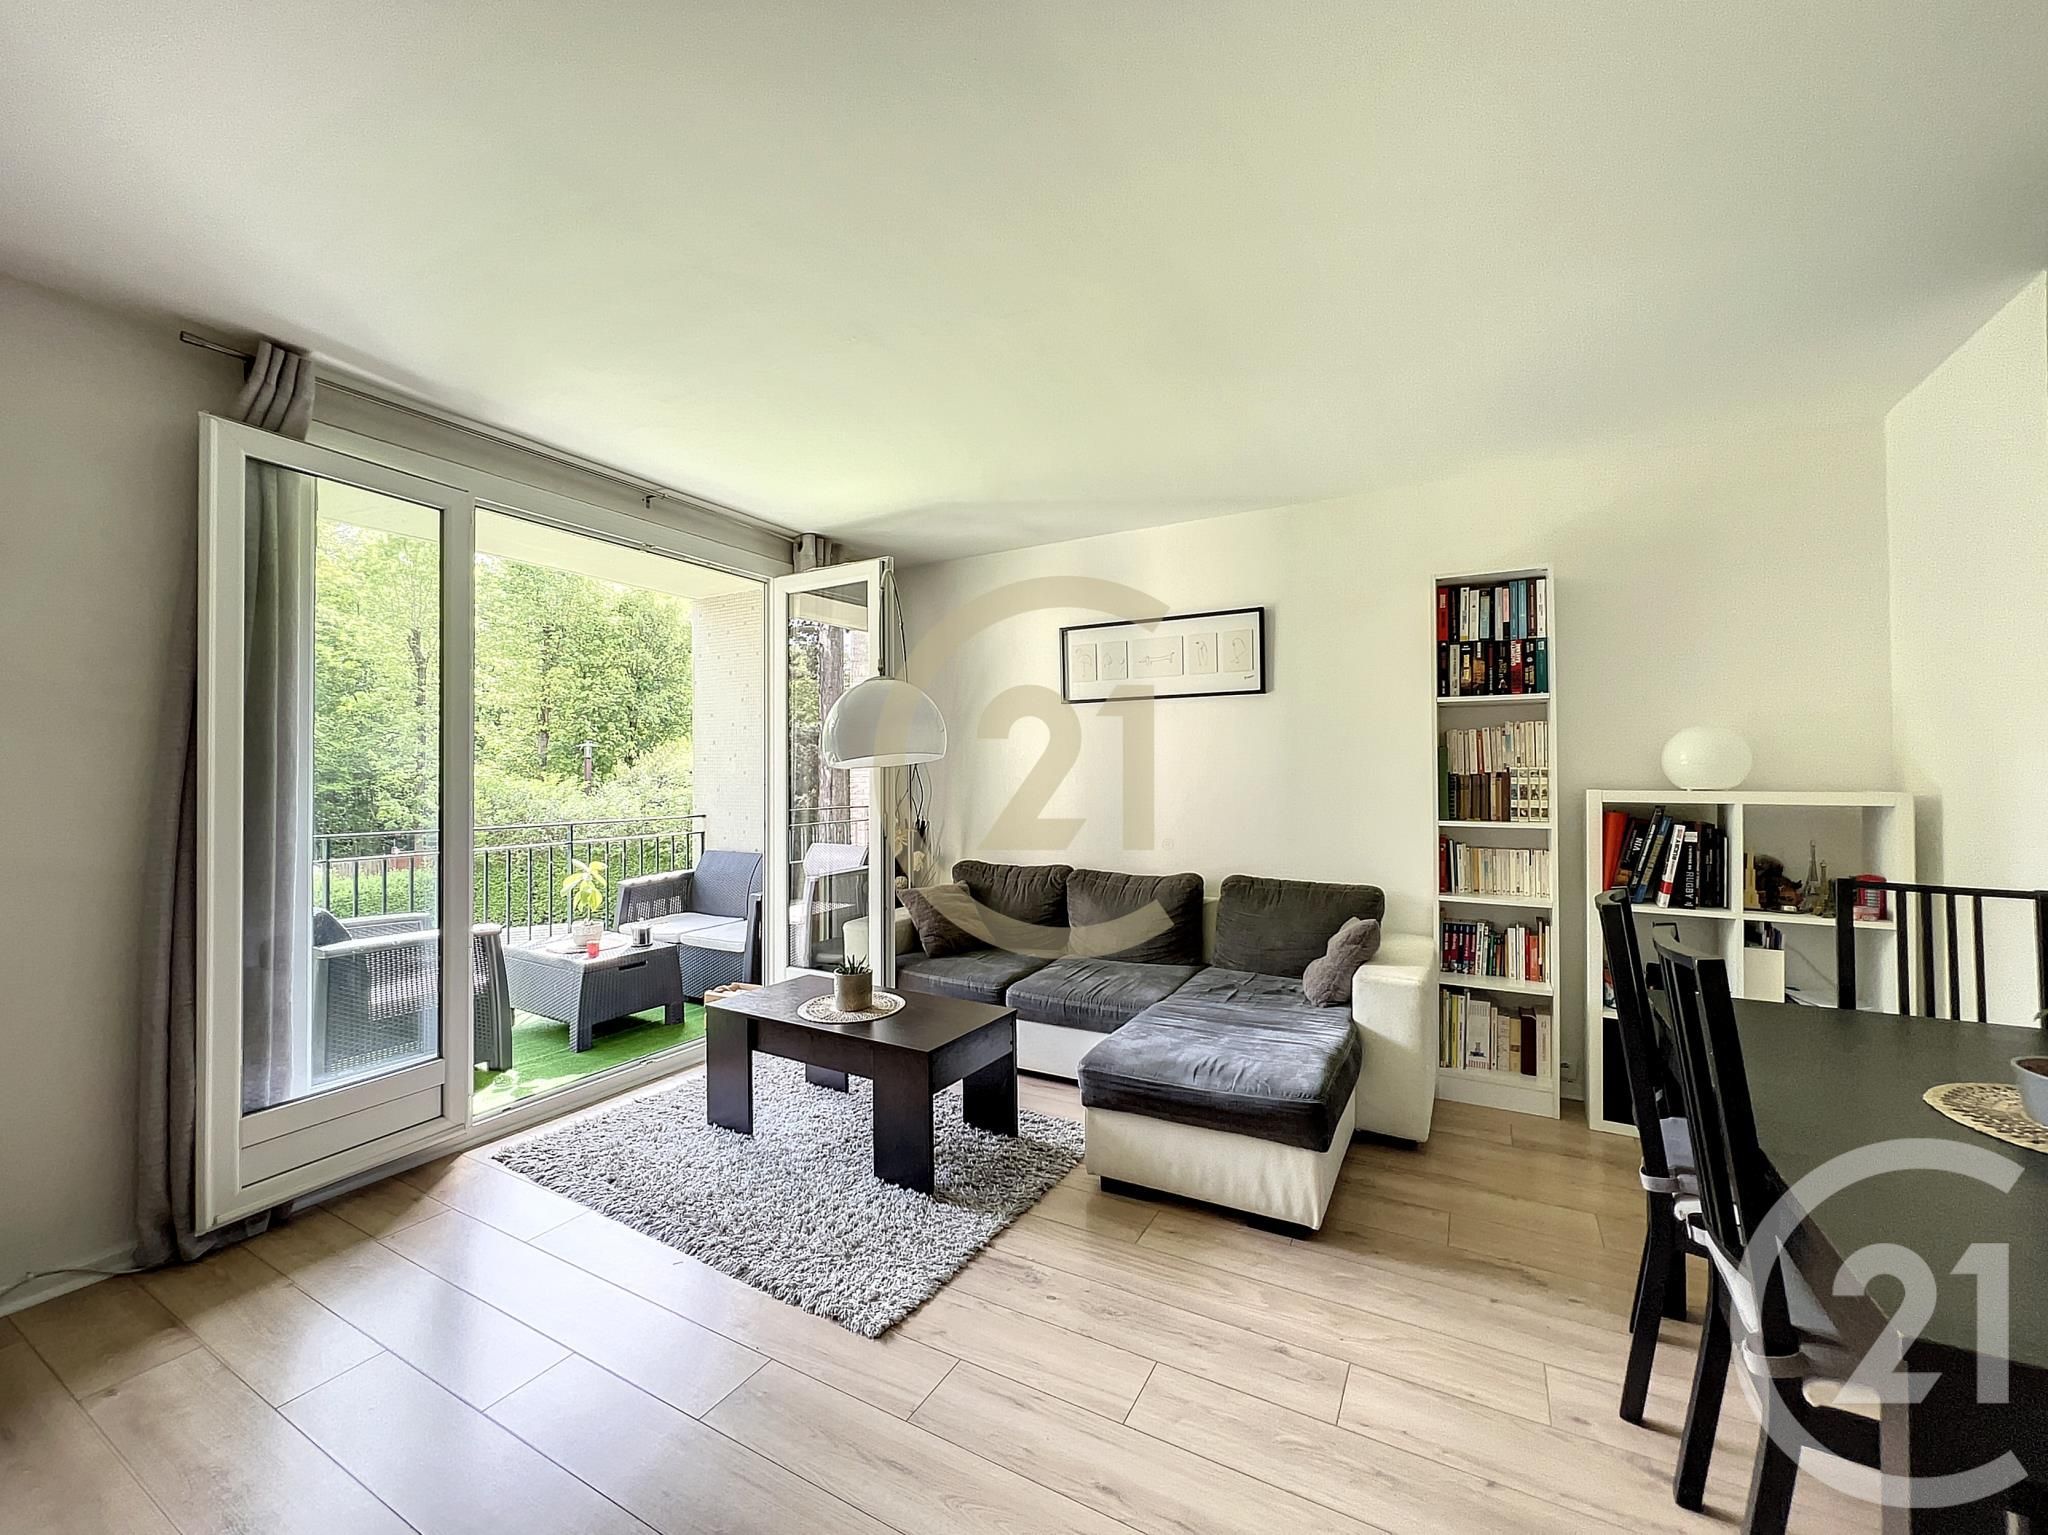 Appartement a louer ville-d'avray - 3 pièce(s) - 71.59 m2 - Surfyn